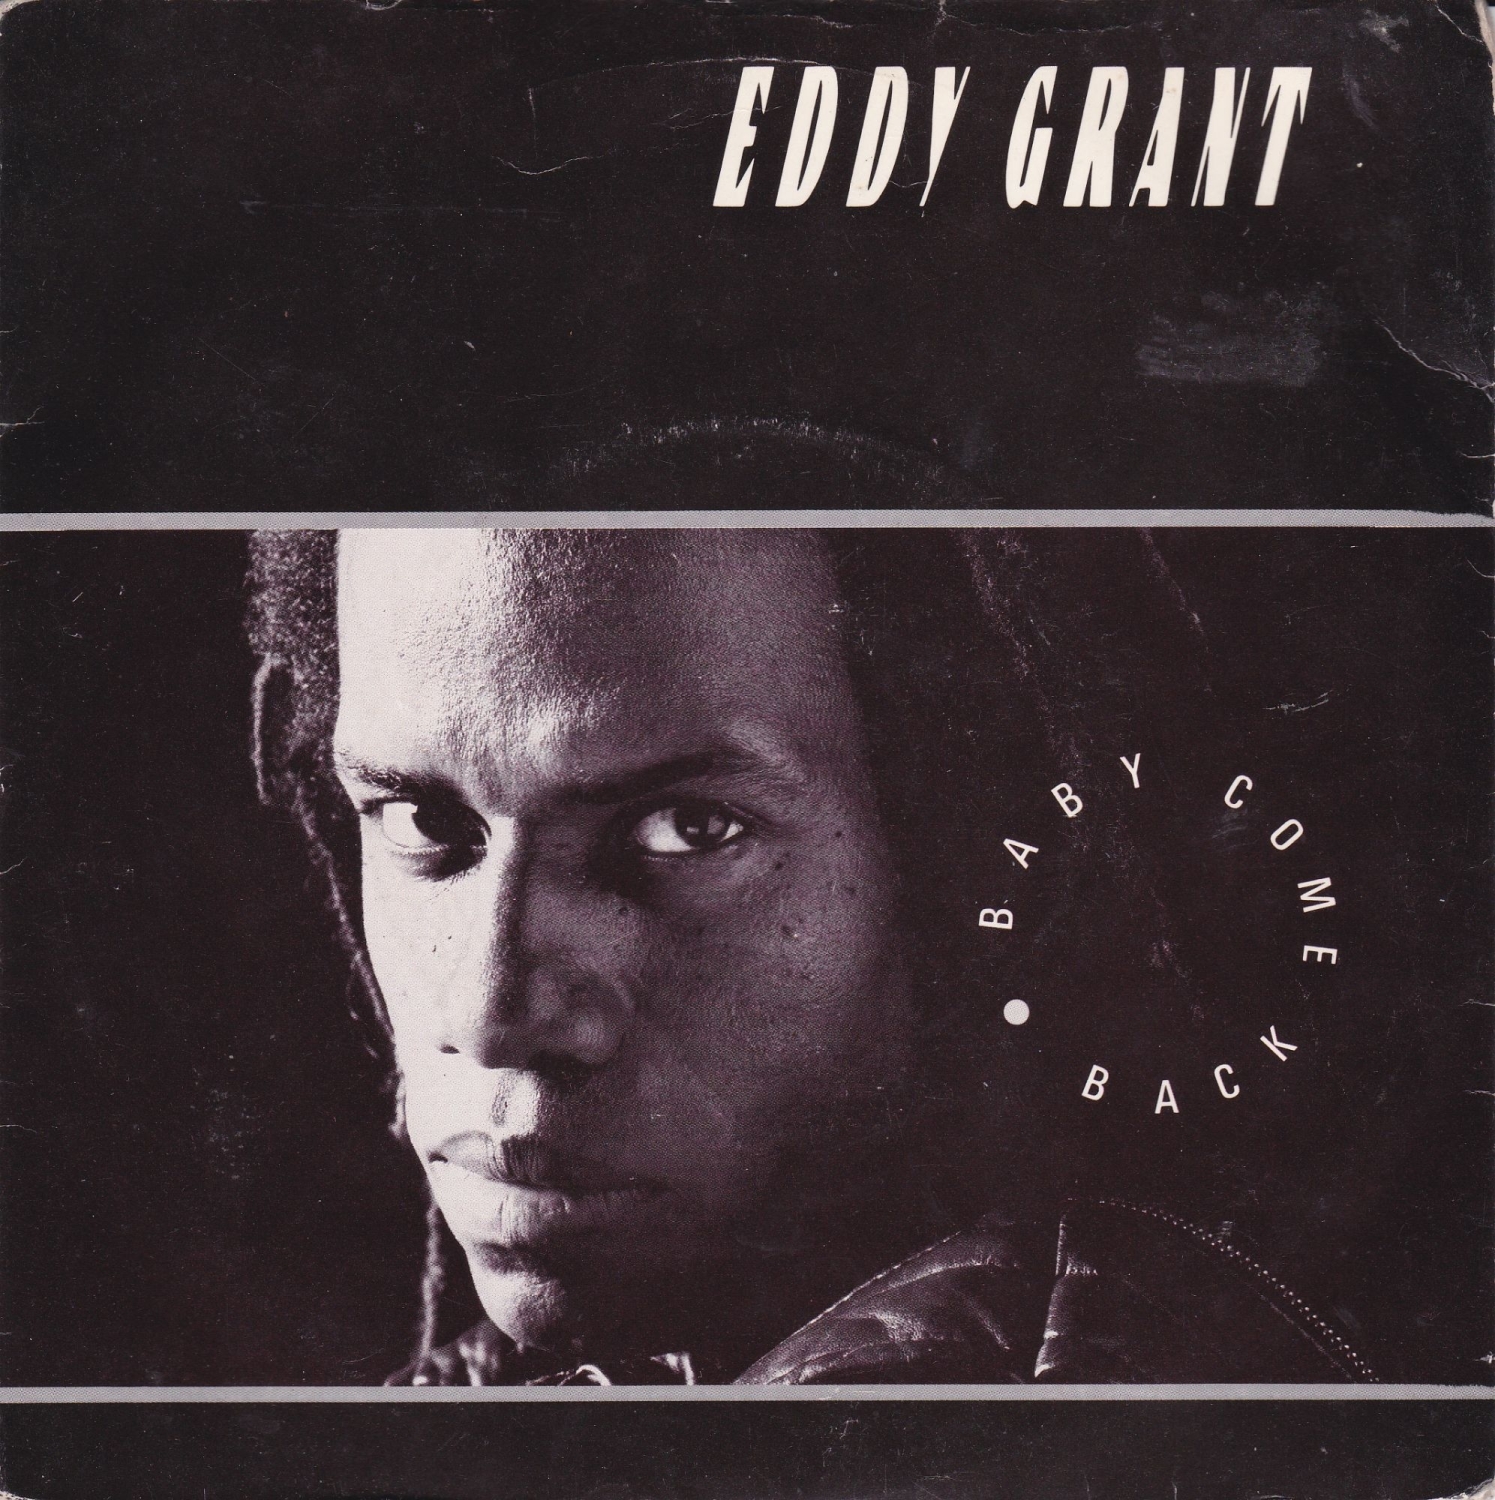 Eddy Grant - Baby come back. Eddy Grant "born Tuff". Винил Эдди Грант. Eddy Grant CD. Песни baby back